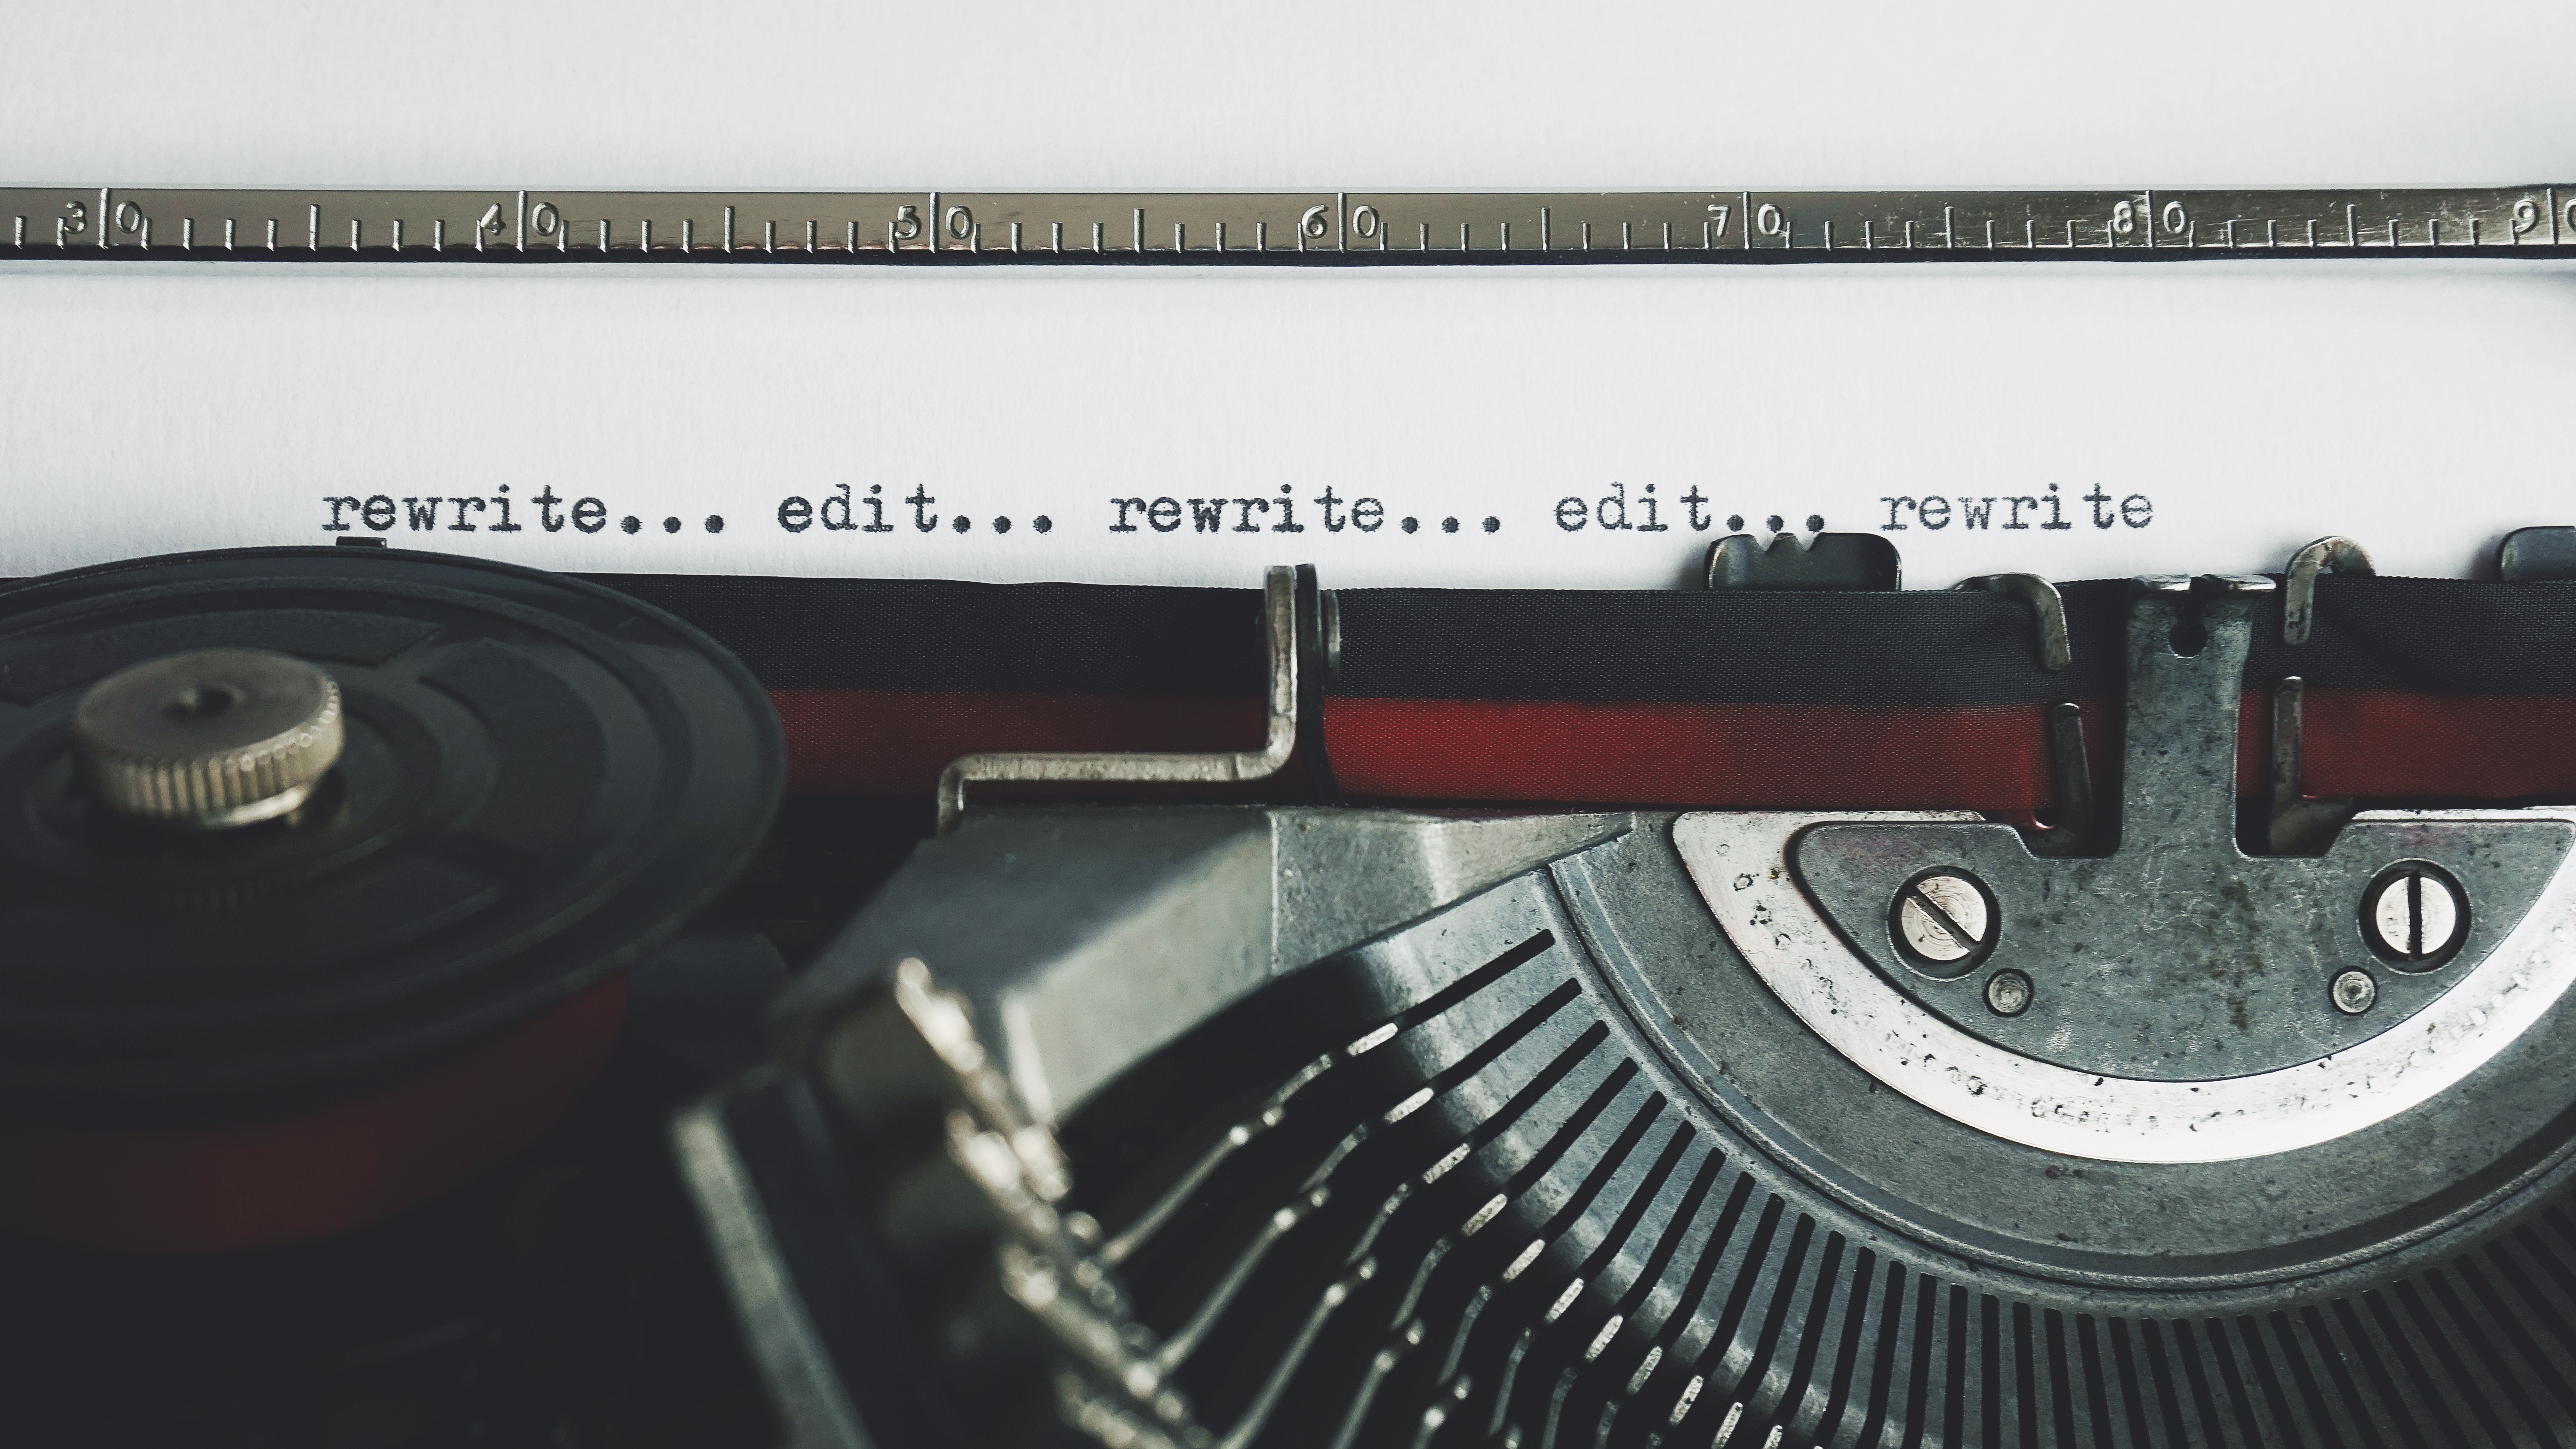 Typewriter typing the text "rewrite... edit... rewrite... edit... rewrite"